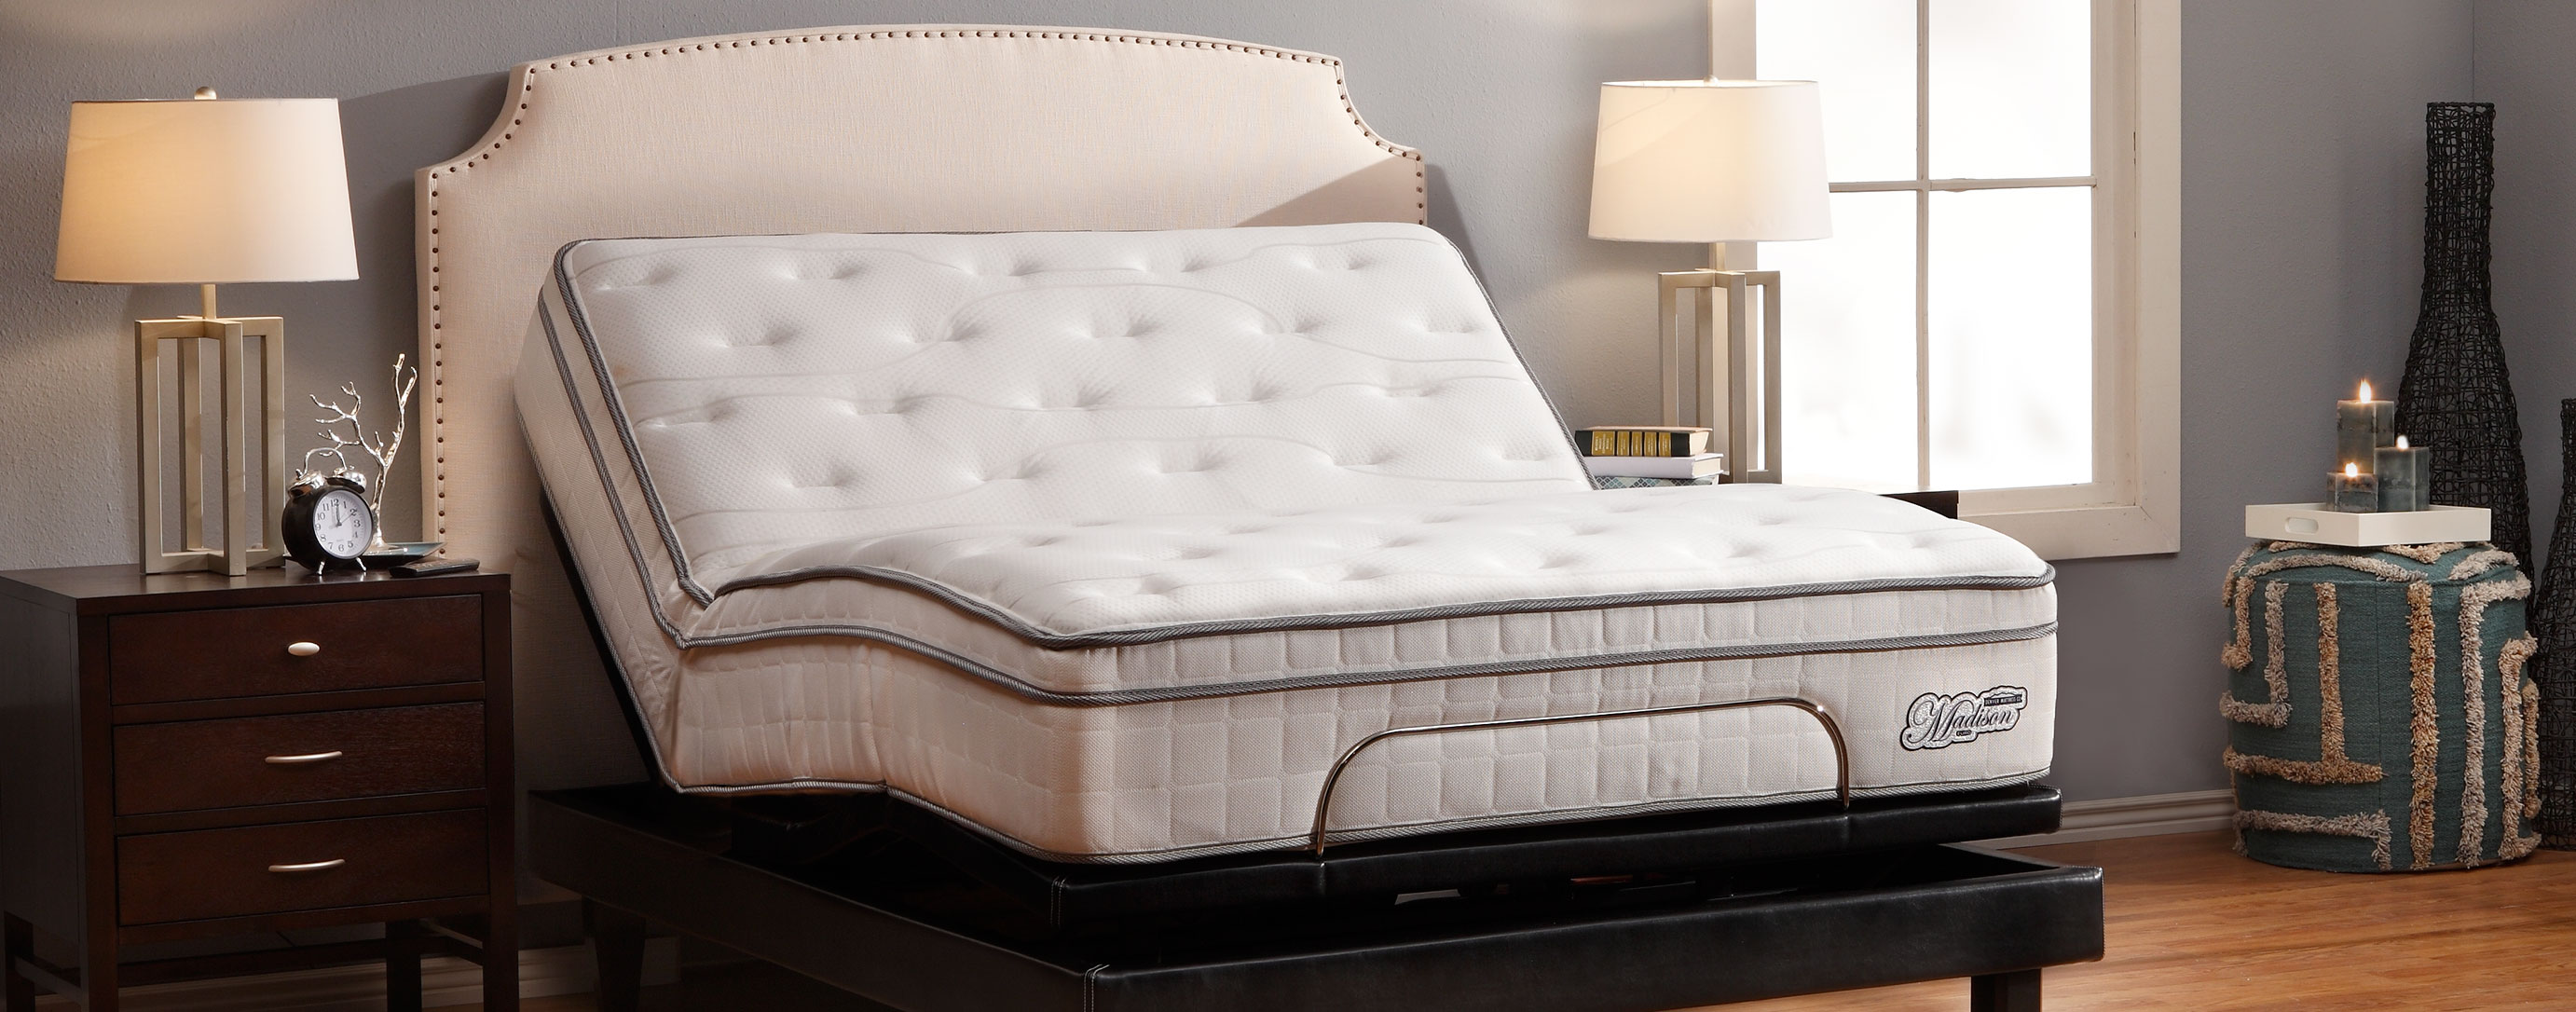 denver mattress furniture row promo